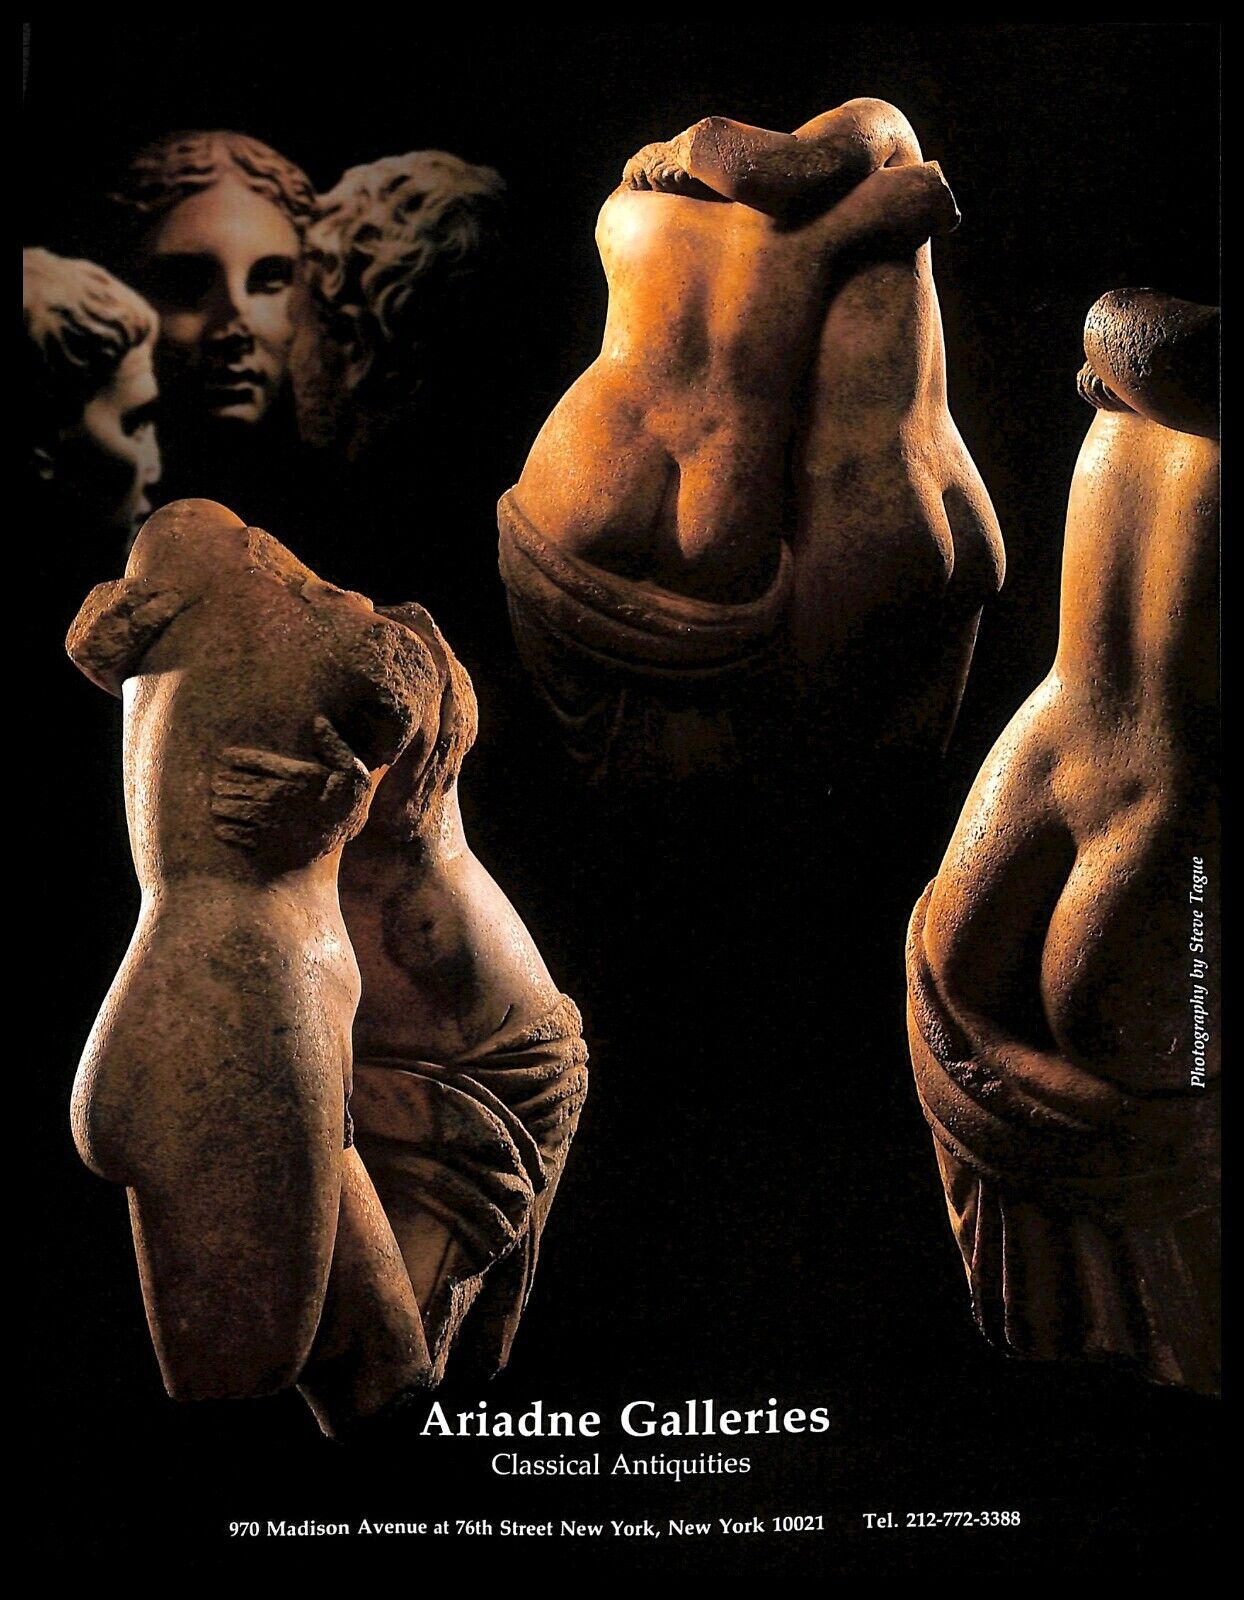 1991 Ariadne Galleries Vintage PRINT AD Classical Antiquities Greek Sculpture